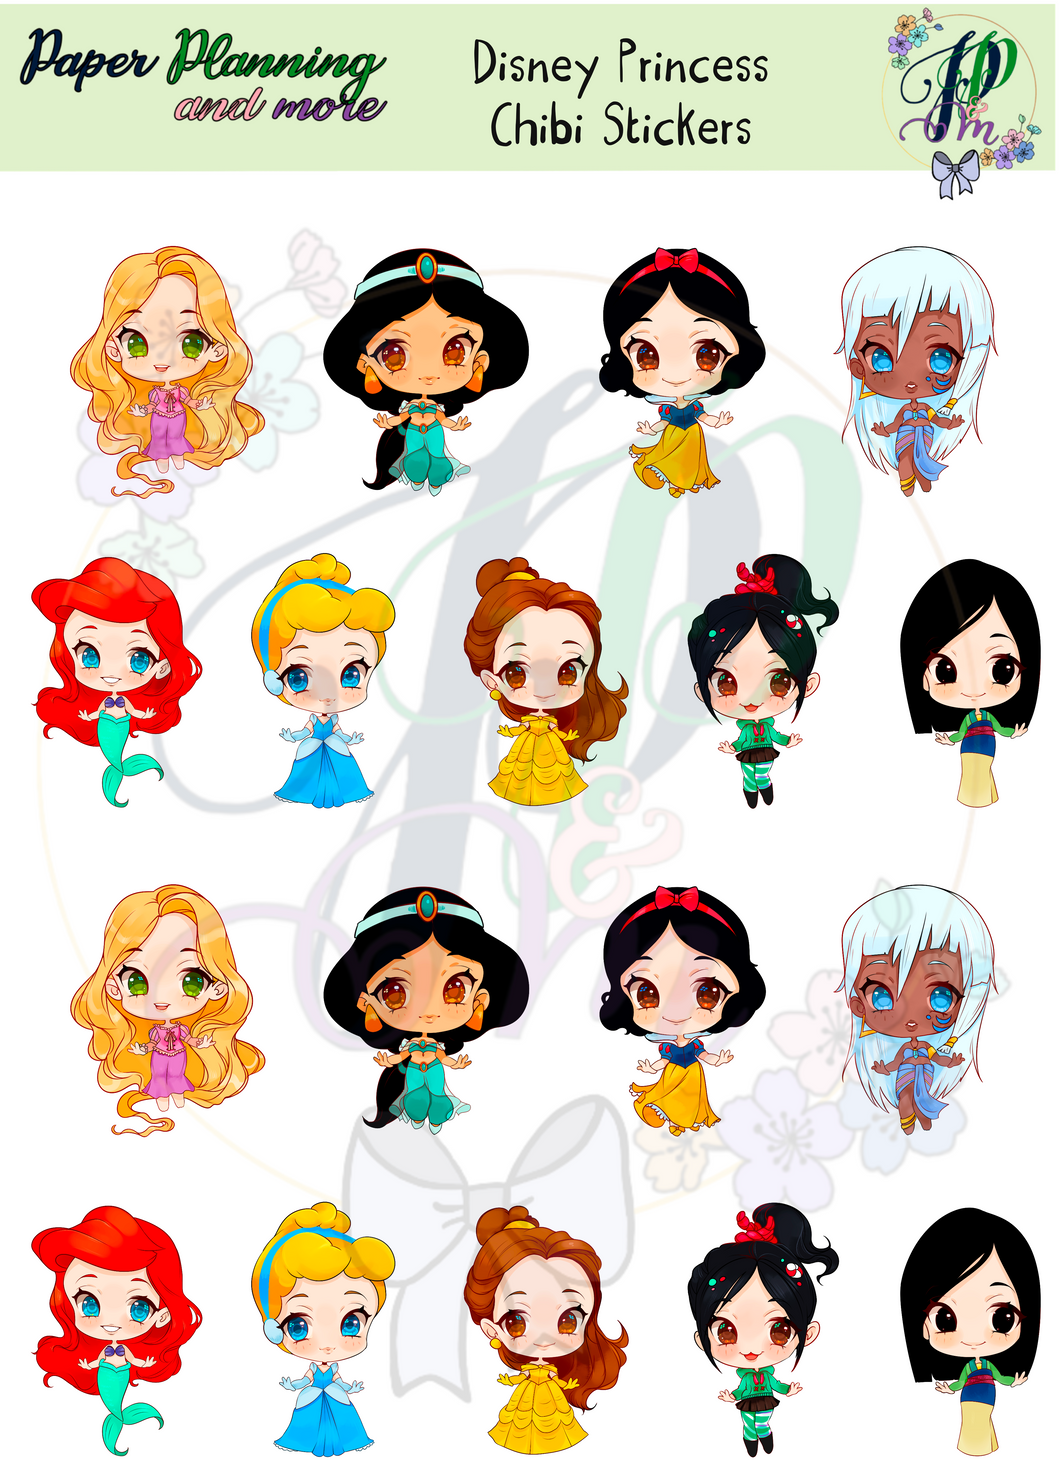 Disney Princess Chibi Sticker Sheet